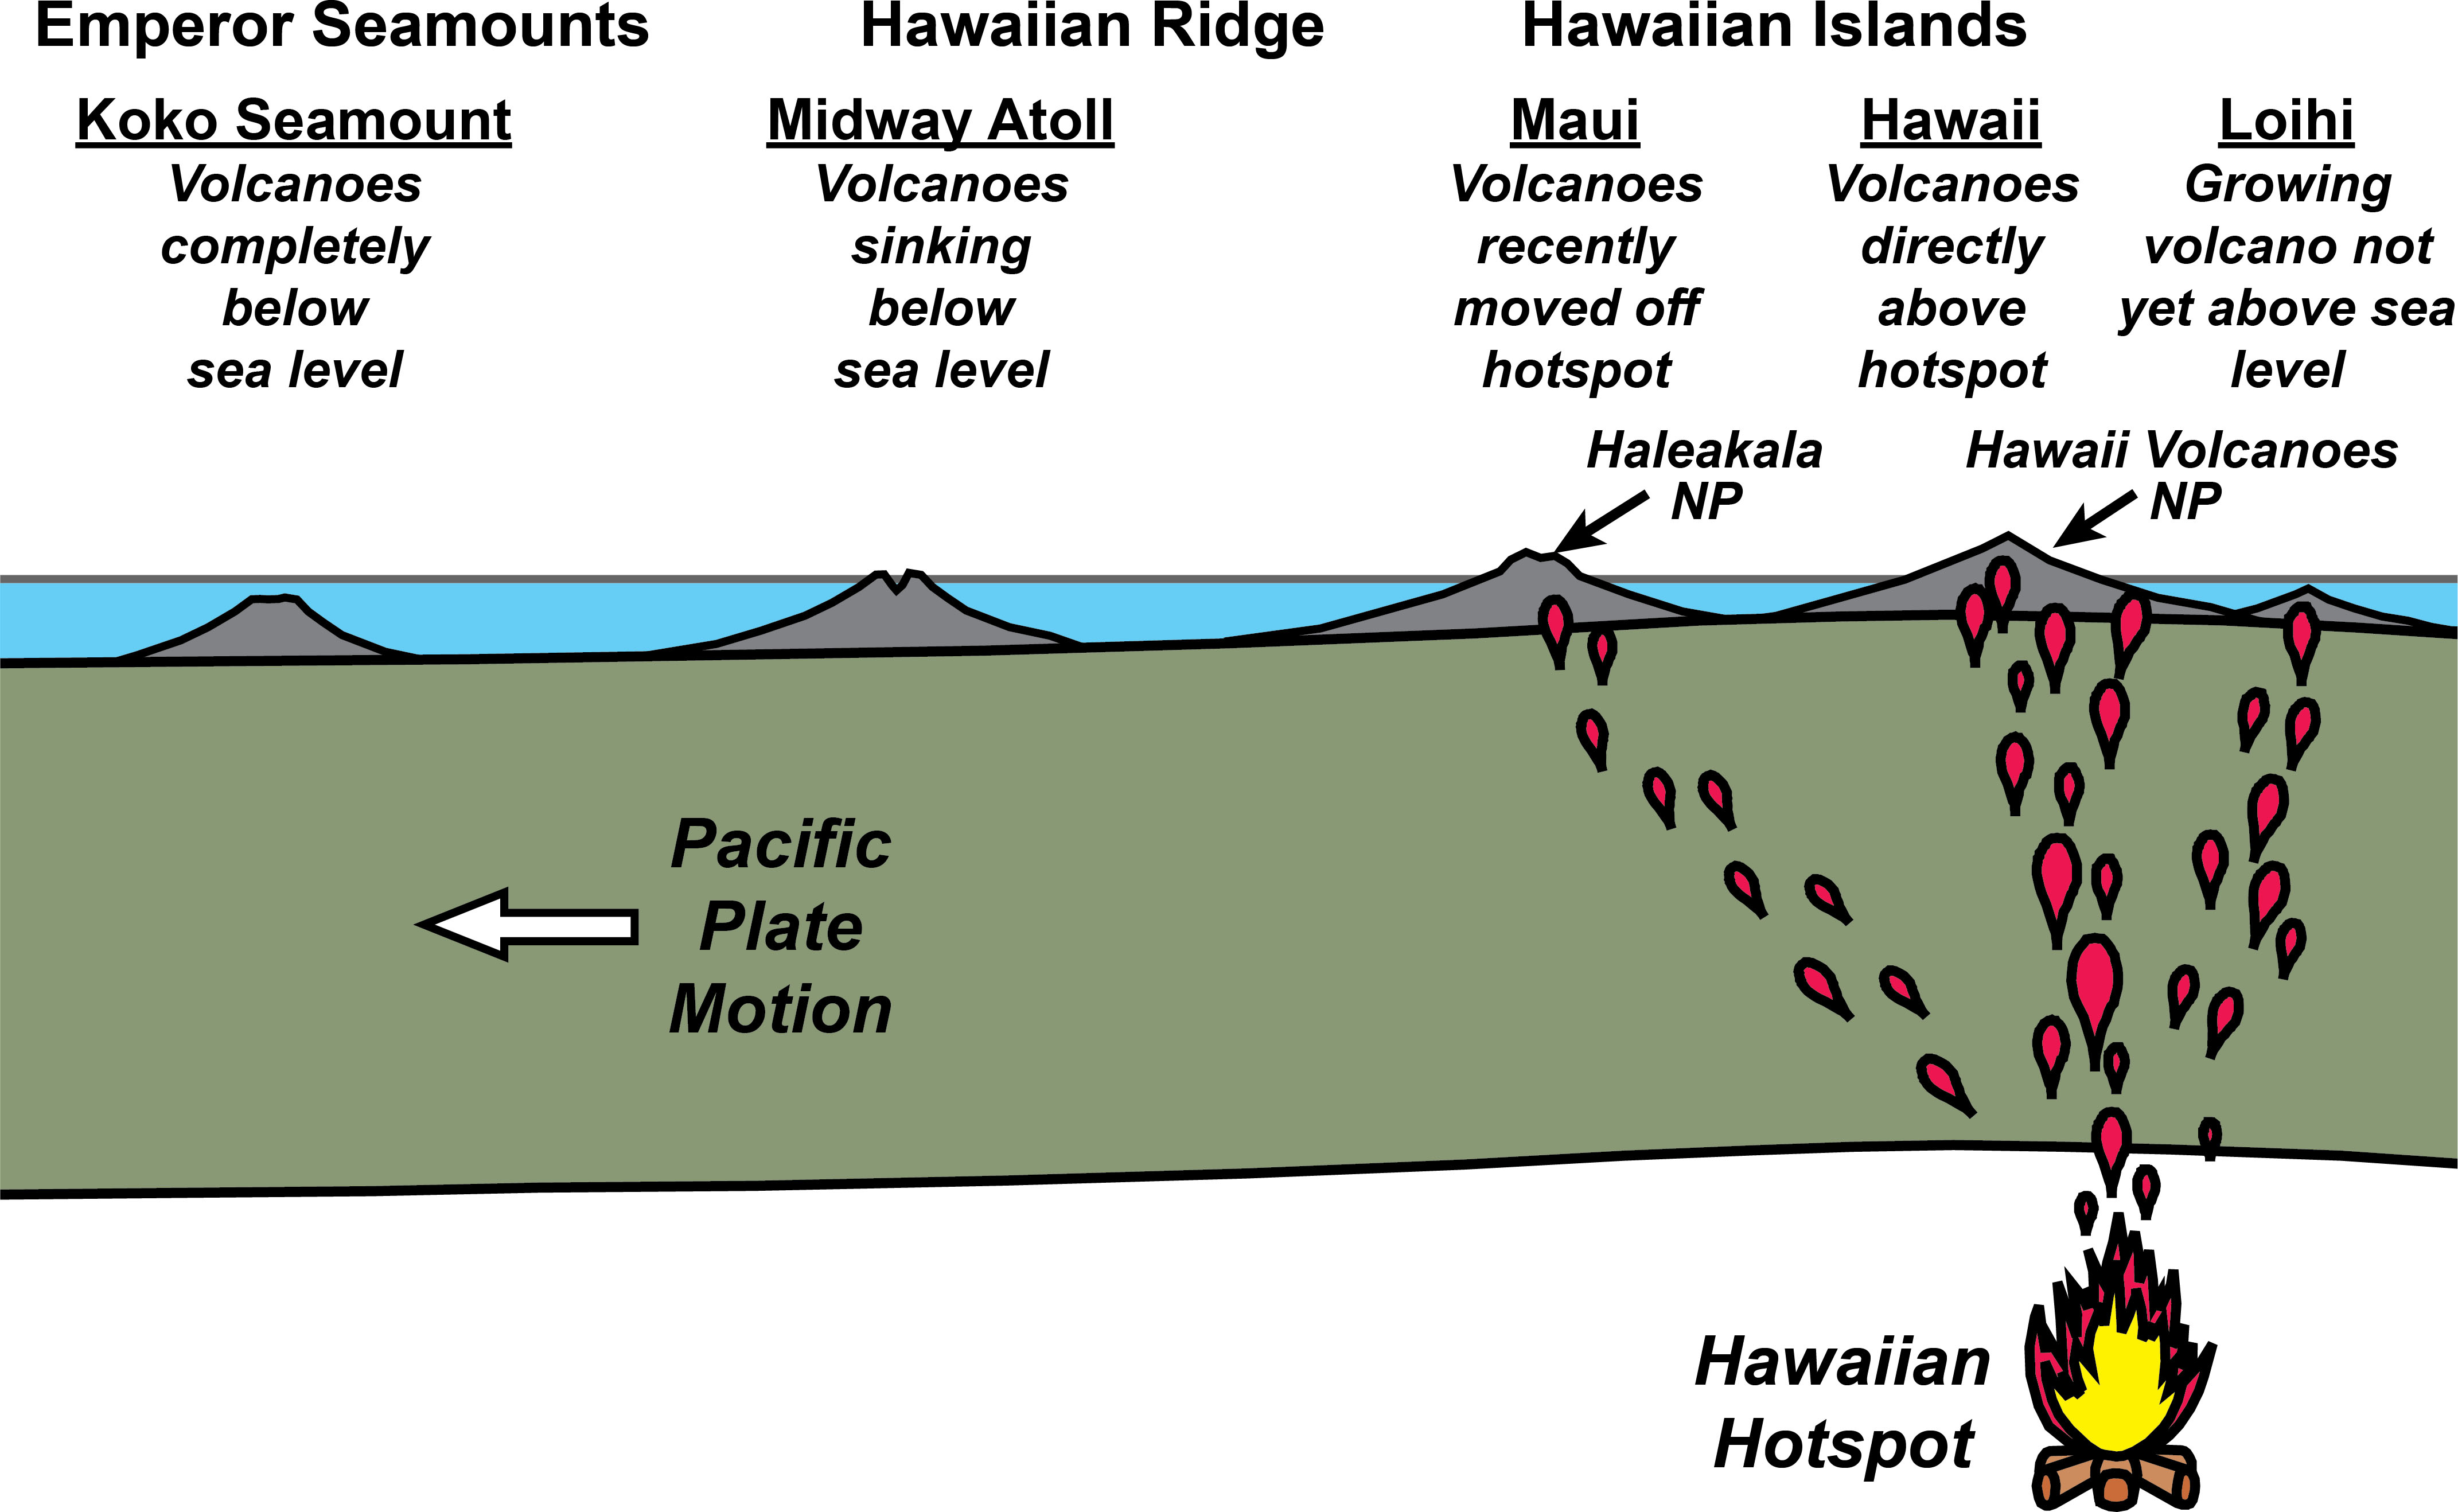 volcanic island diagram